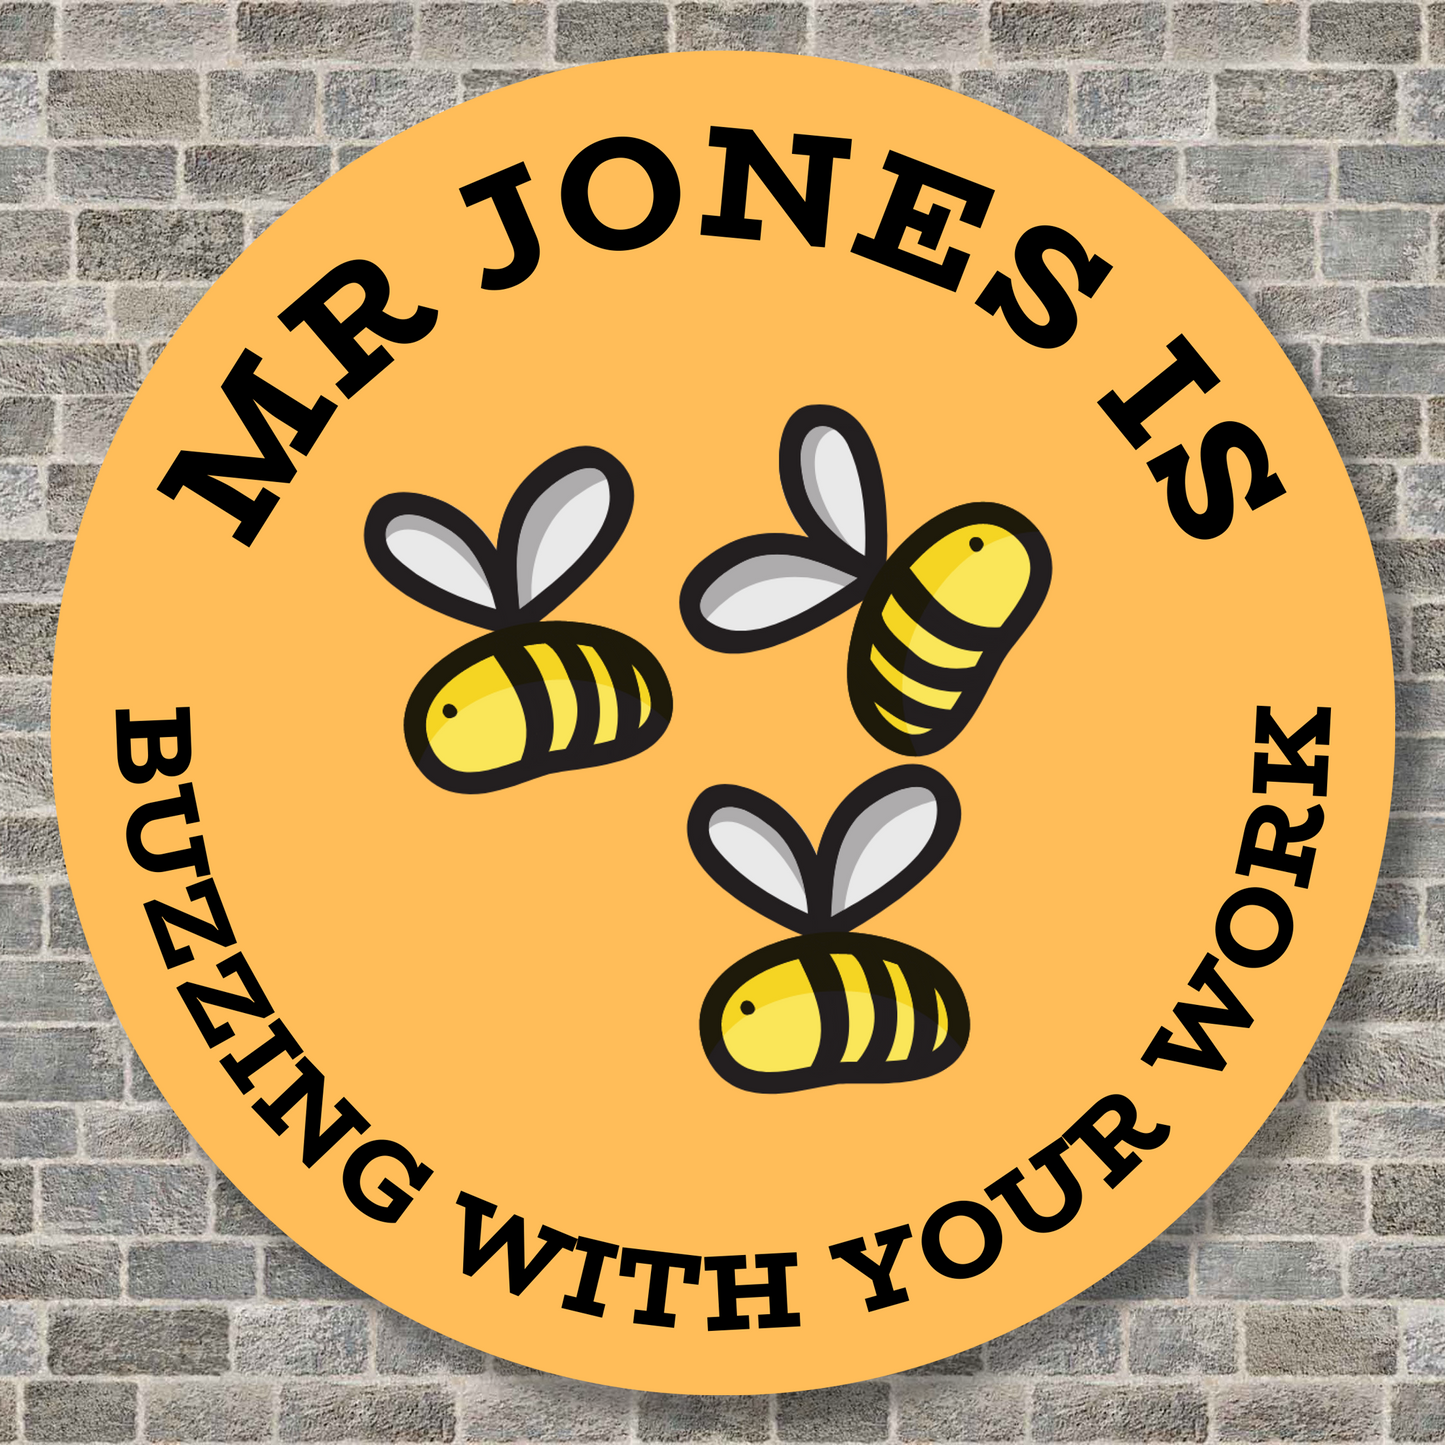 3 Bee's buzzing teacher reward stickers | Teacher Stickers